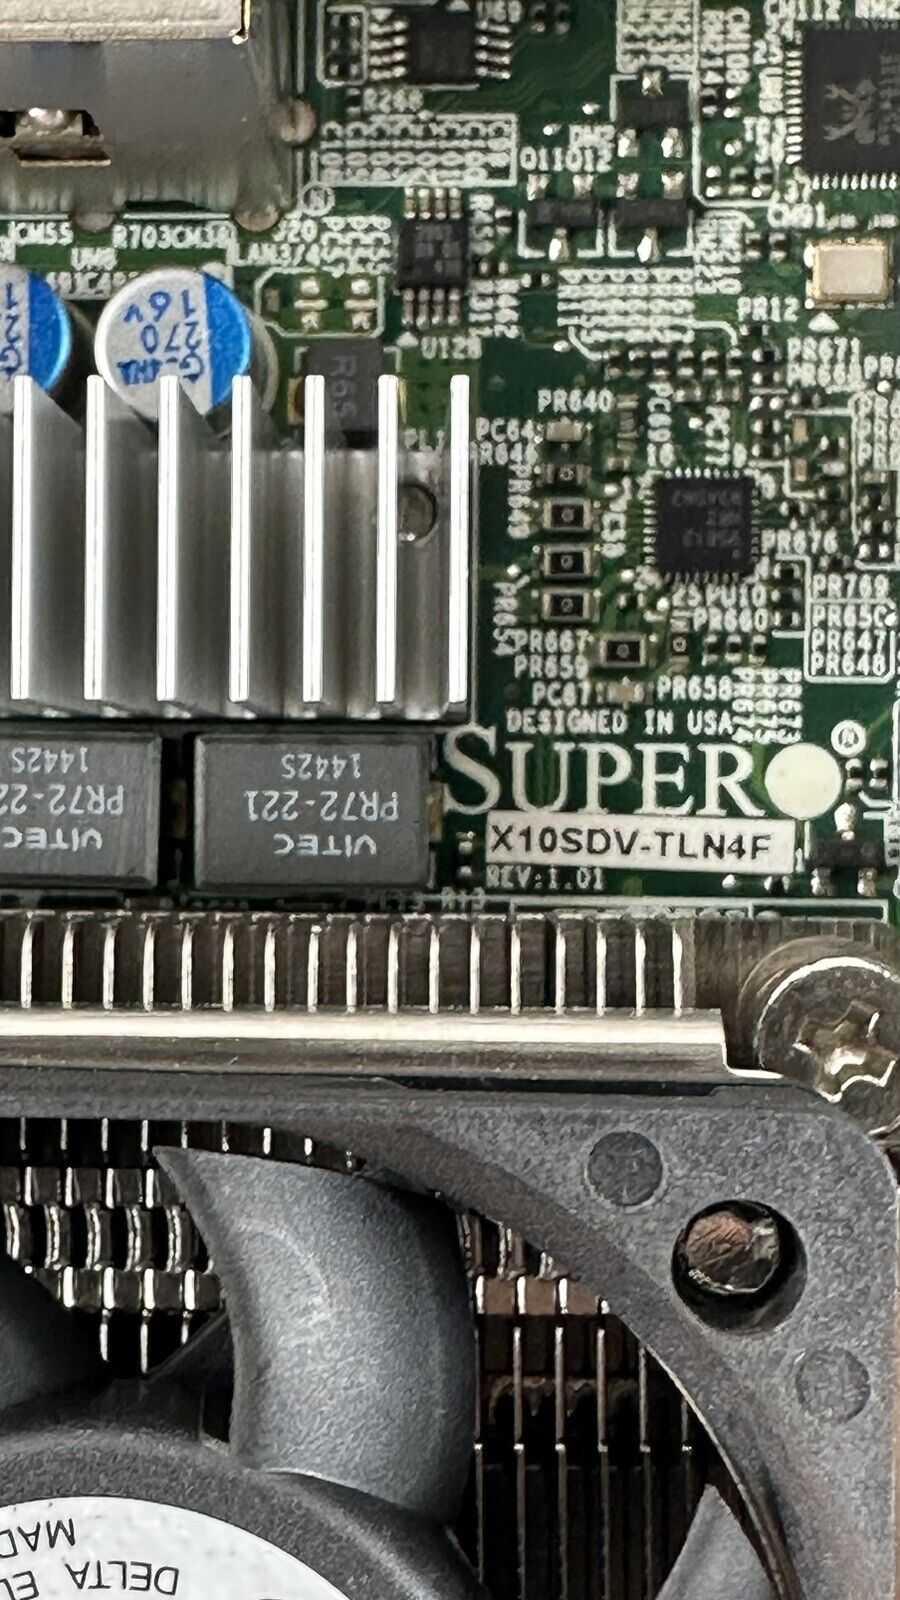 Supermicro 5018D-FN4T Xeon-D 1540 8 Core 64GB DDR4 ECC RAM 4x 1TB SSD Server